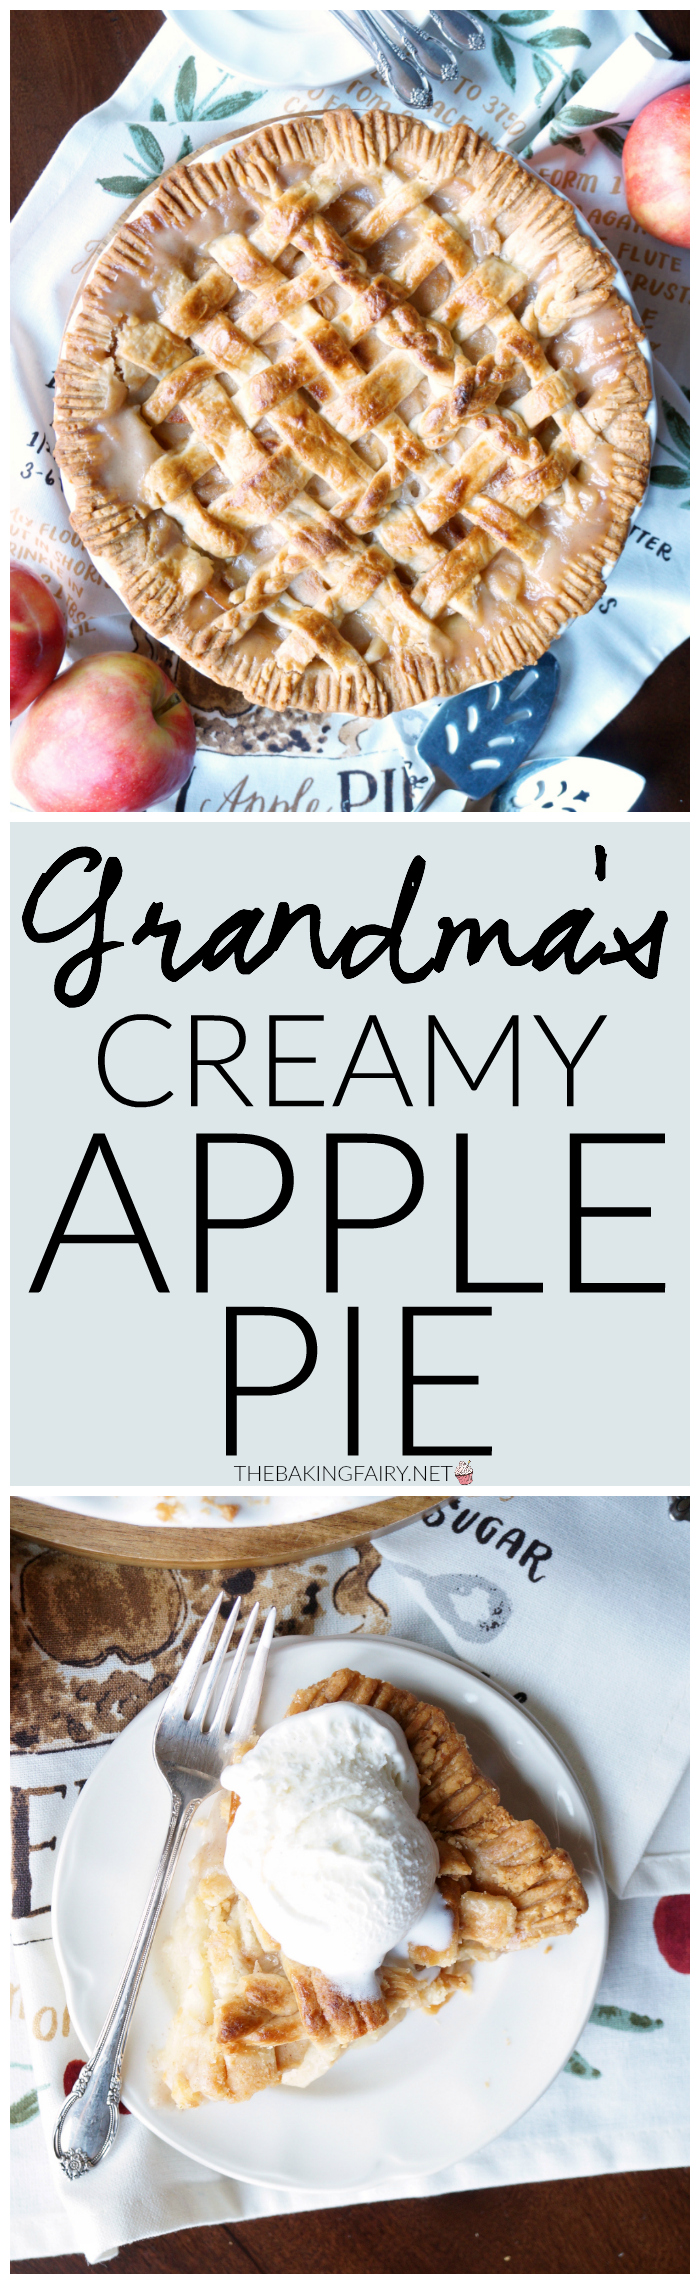 grandma's creamy apple pie | The Baking Fairy